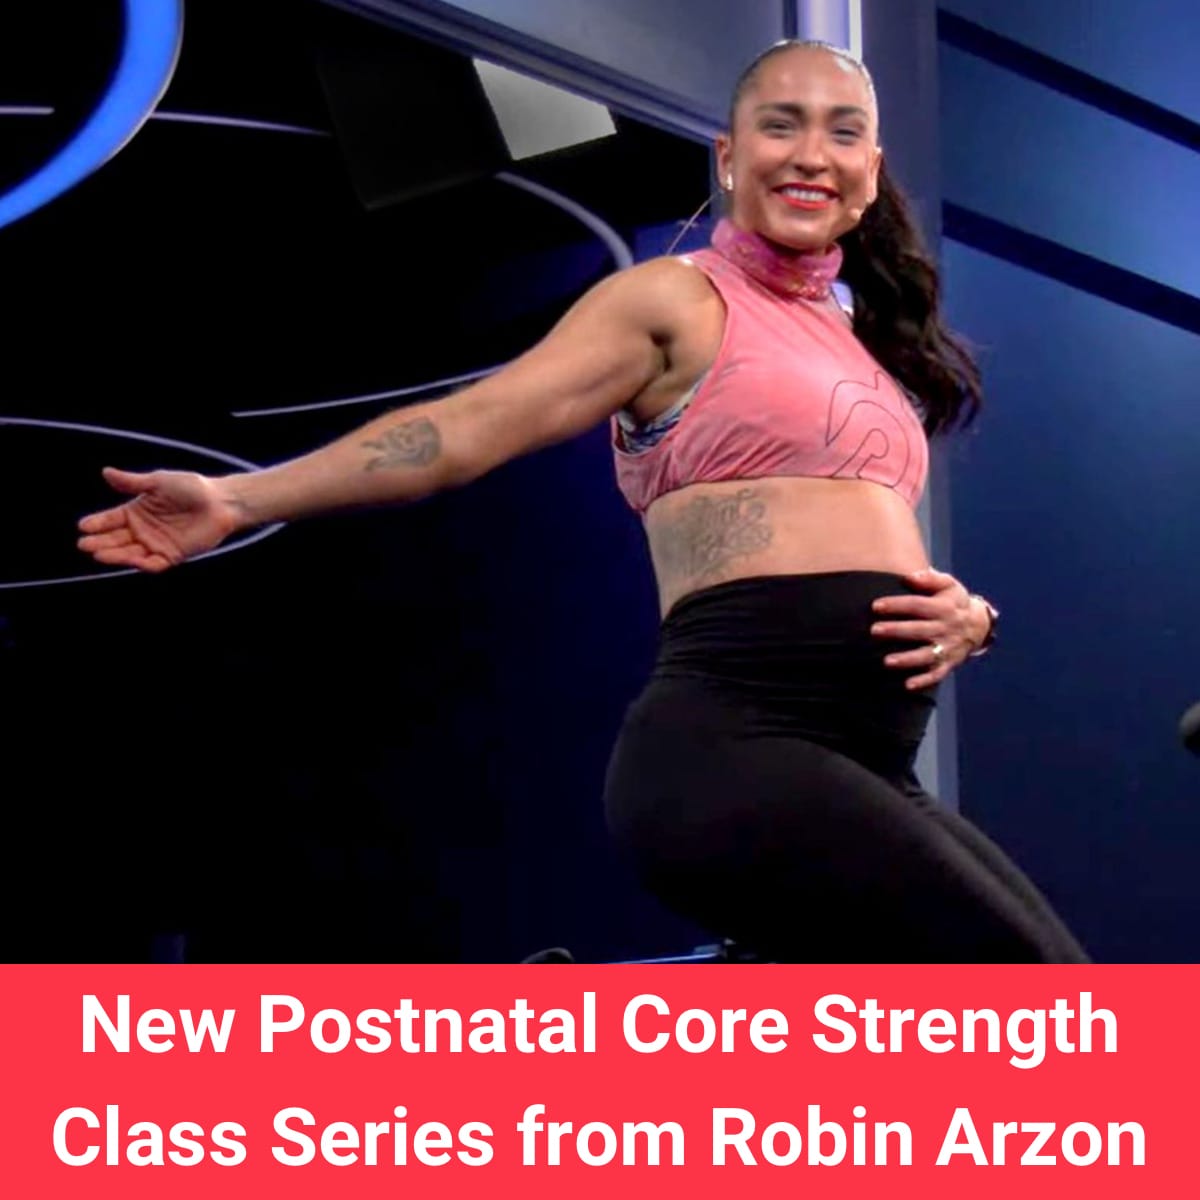 New Postnatal Core Strength Peloton Class Series from Robin Arzon